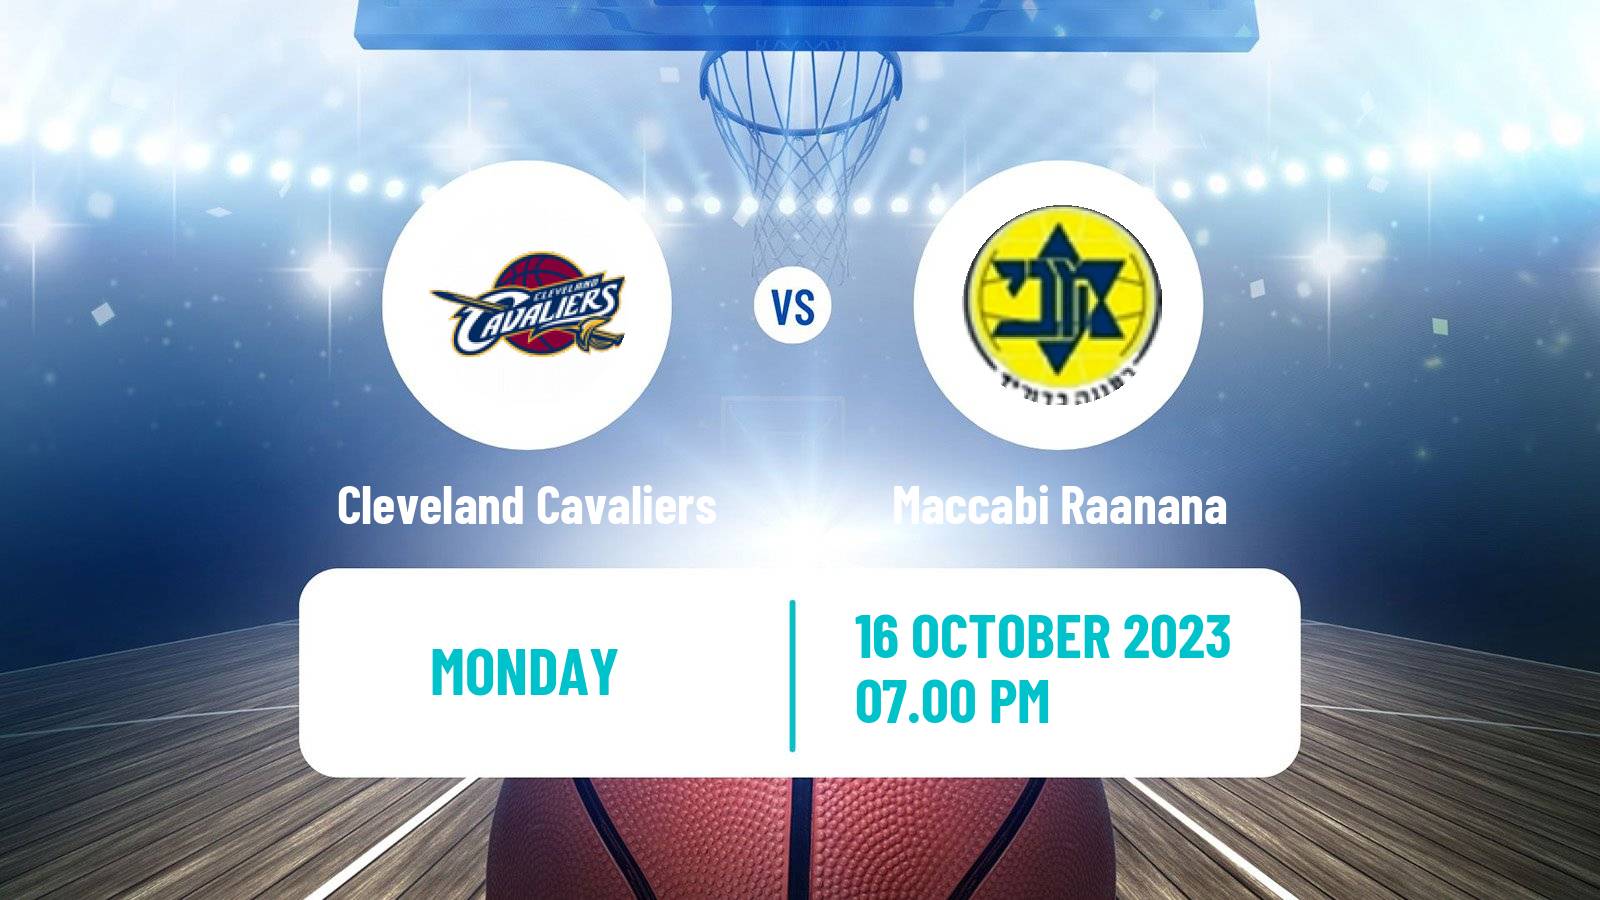 Basketball Club Friendly Basketball Cleveland Cavaliers - Maccabi Raanana